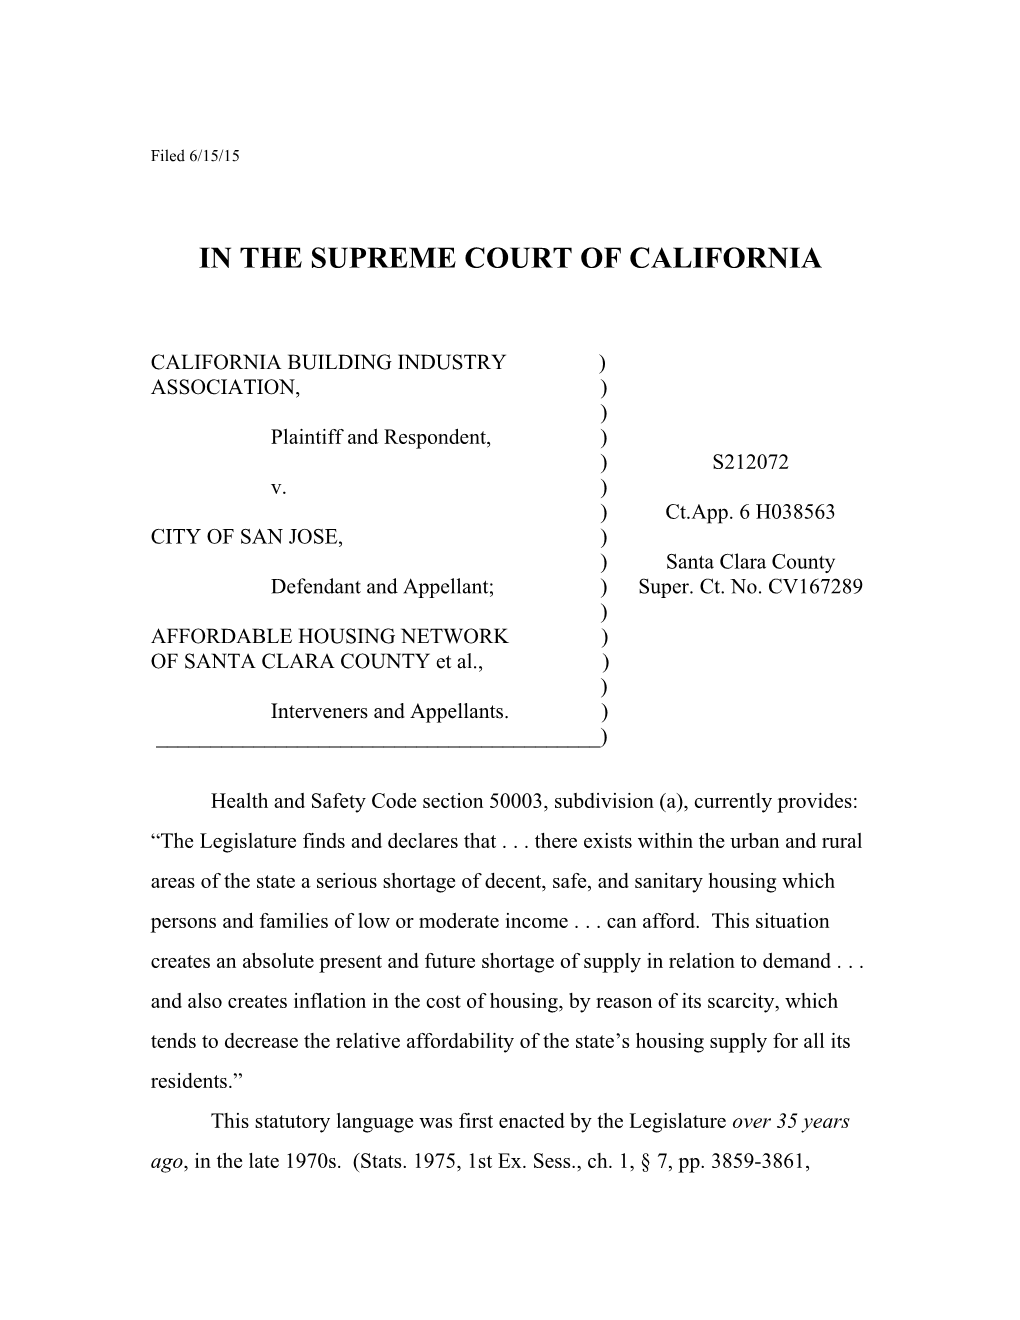 In the Supreme Court of California s4